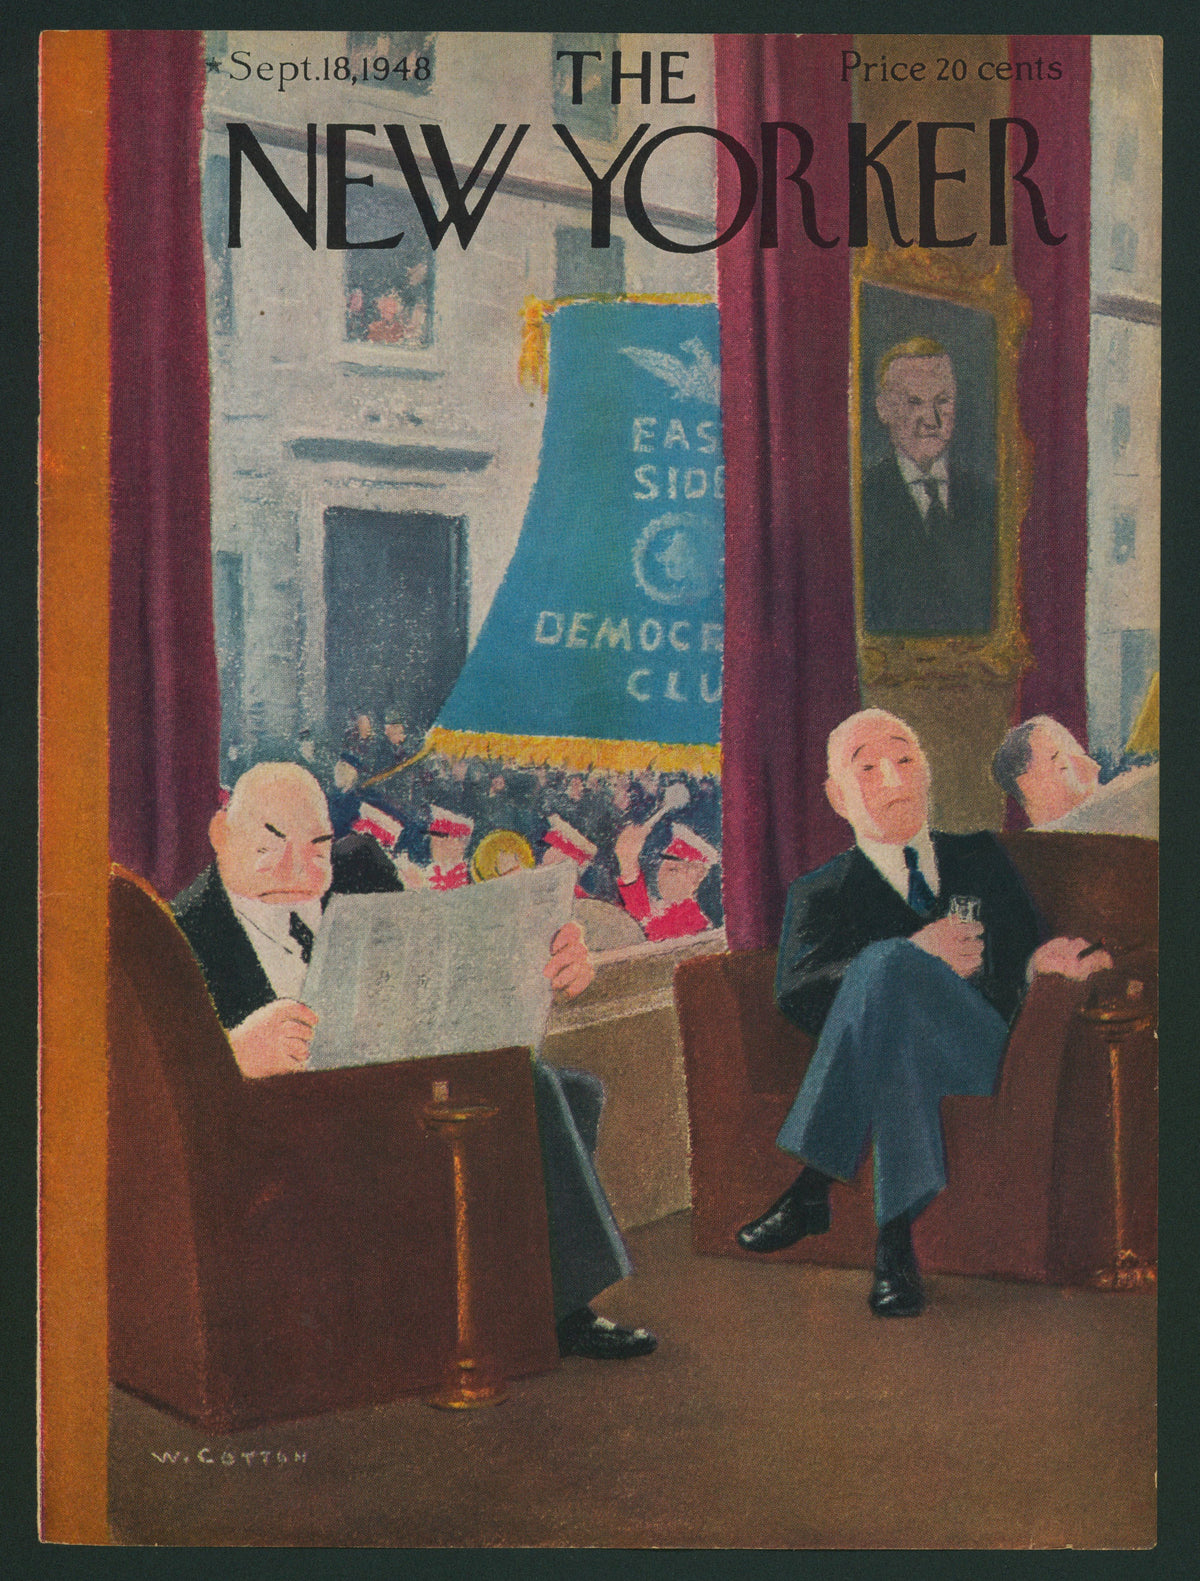 Democratic Club- The New Yorker - Authentic Vintage Antique Print